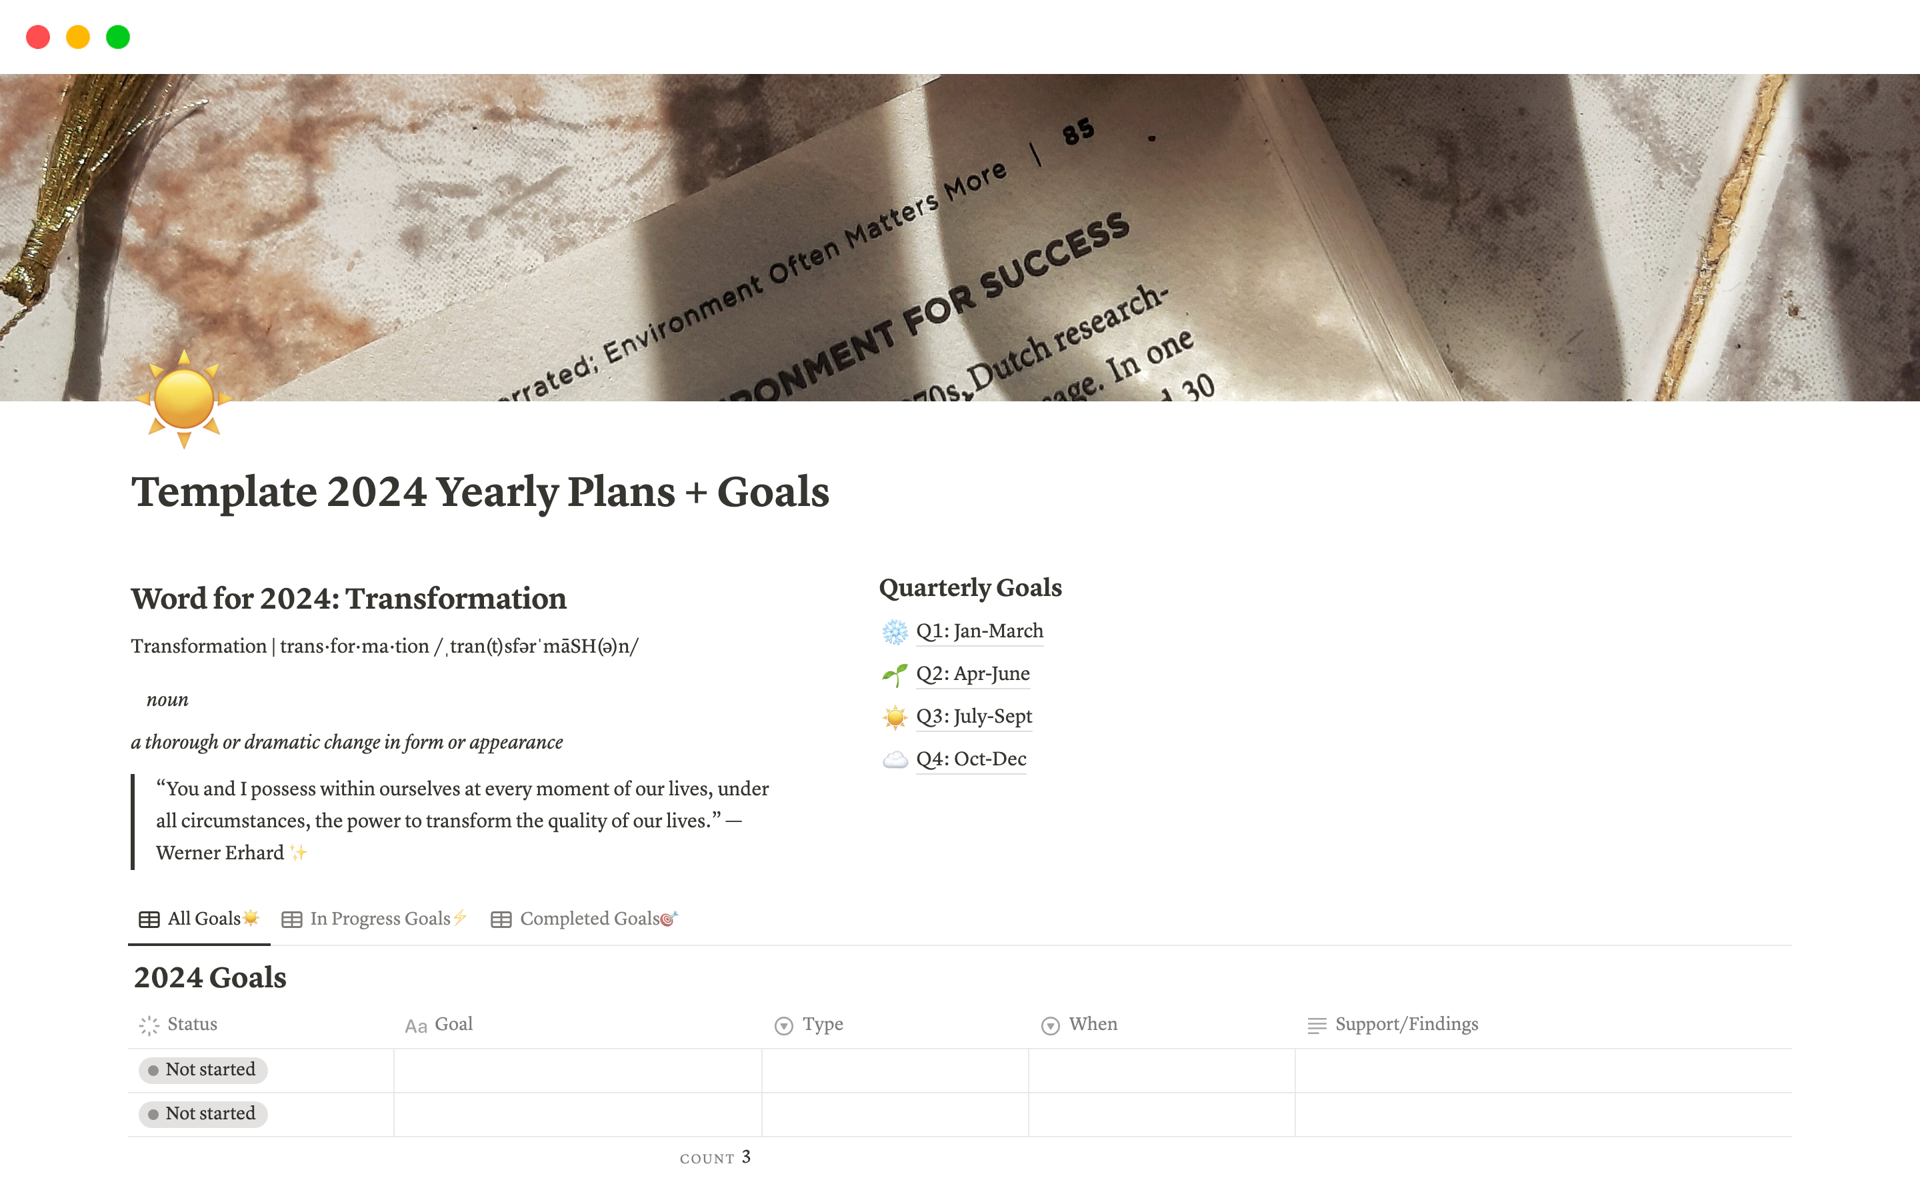 Vista previa de una plantilla para 2024 Yearly Plans and Goals